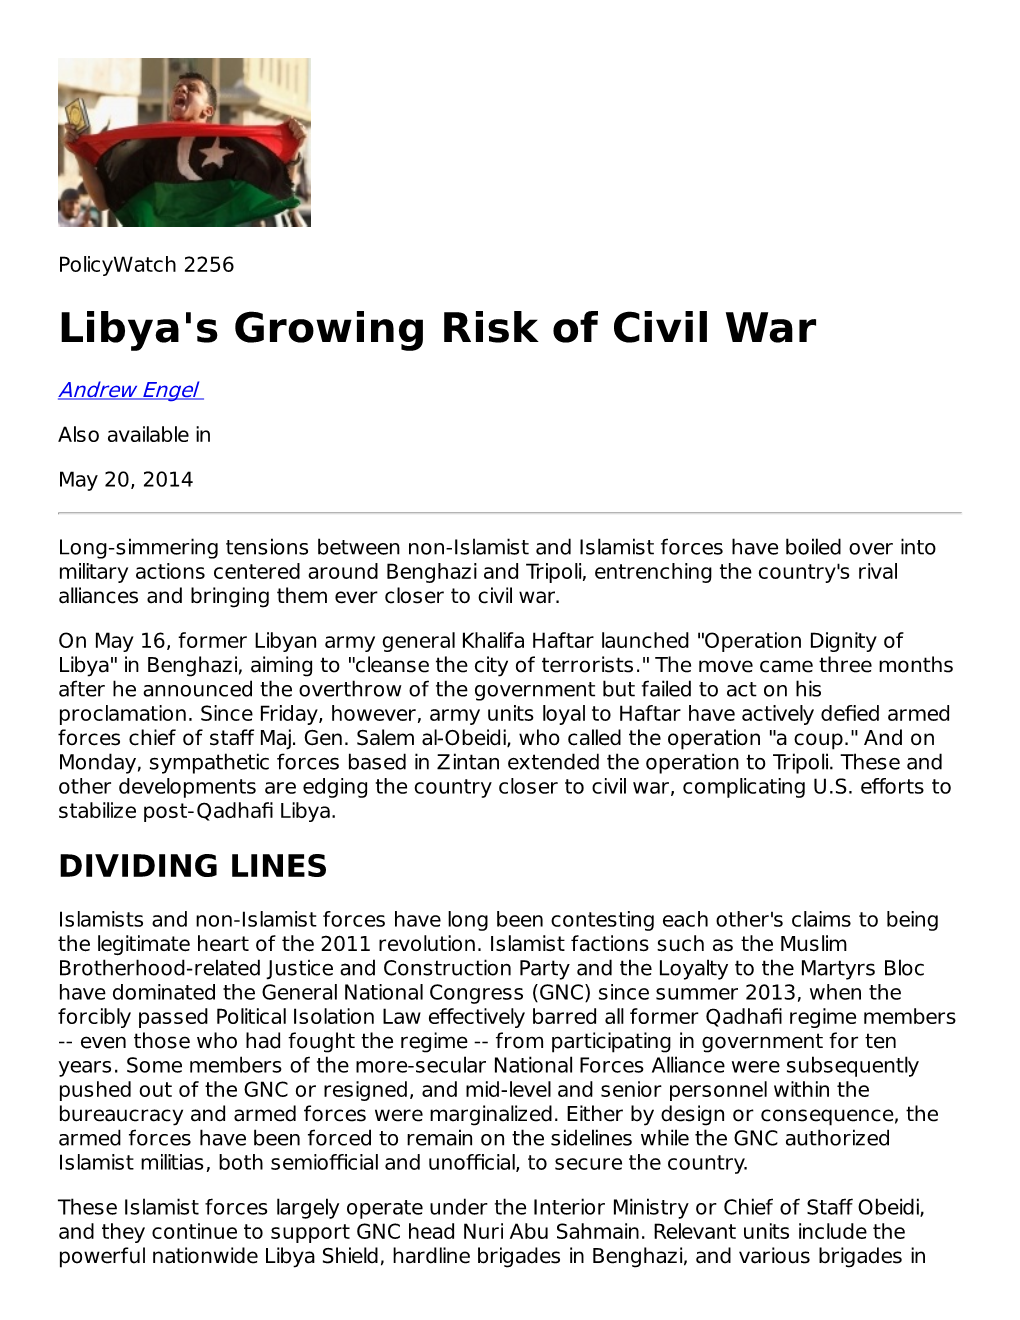 Libya's Growing Risk of Civil War